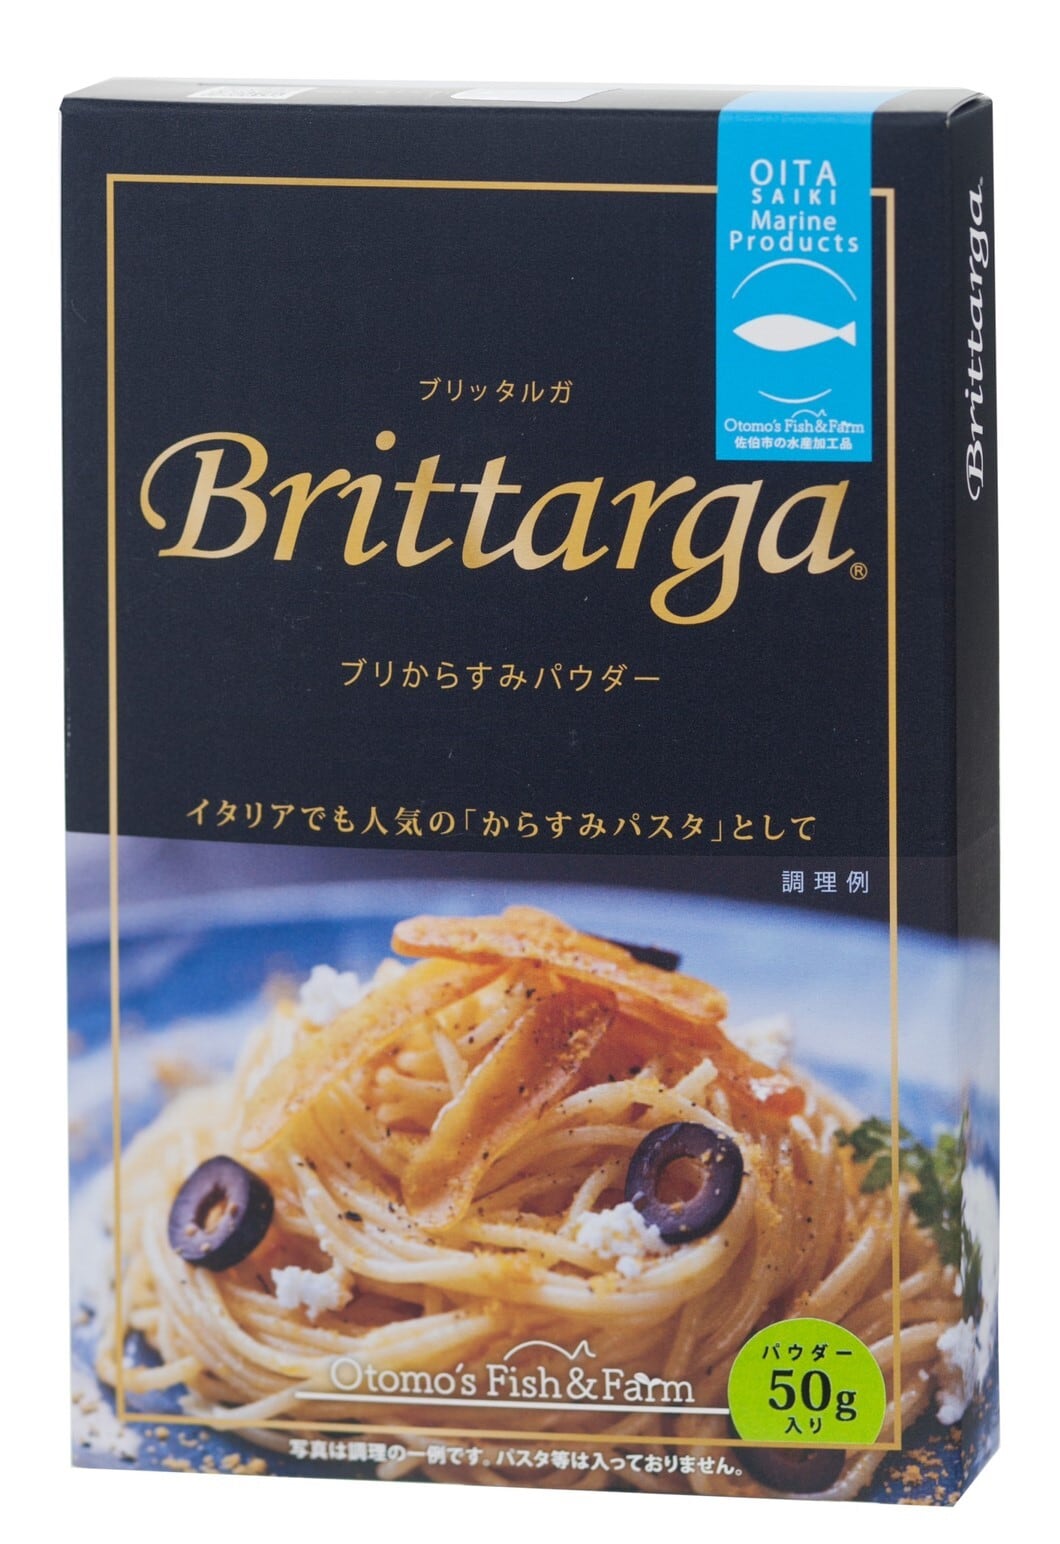 50g×4袋セット（ぶりの真子のカラスミ）【送料無料】Brittarga　パウダー　di　ブリッタルガ　オートモズ　FF　powder:Bottarga　yellowtail